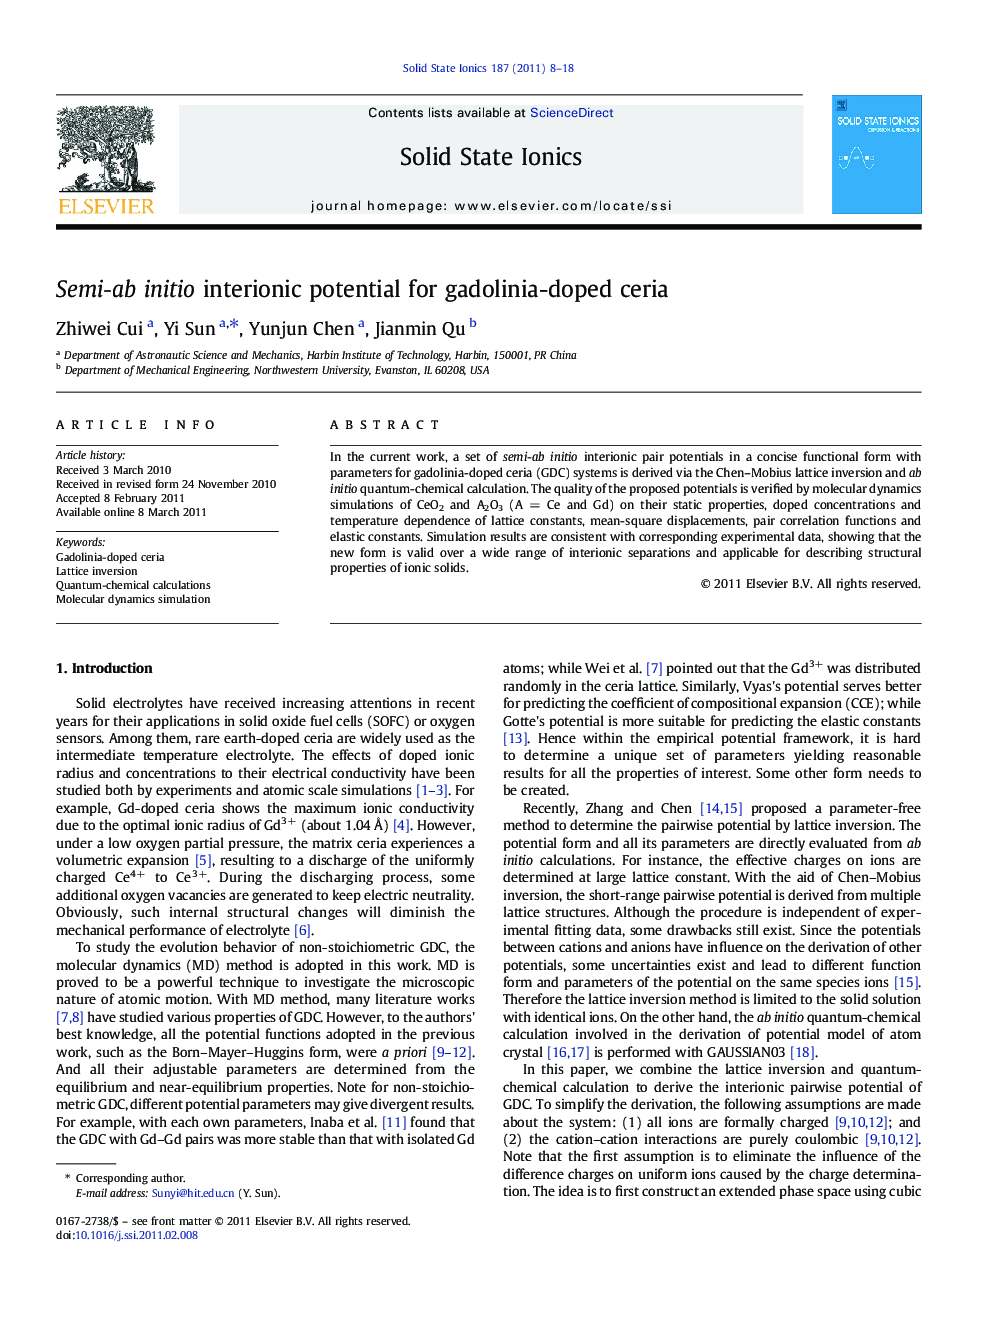 Semi-ab initio interionic potential for gadolinia-doped ceria